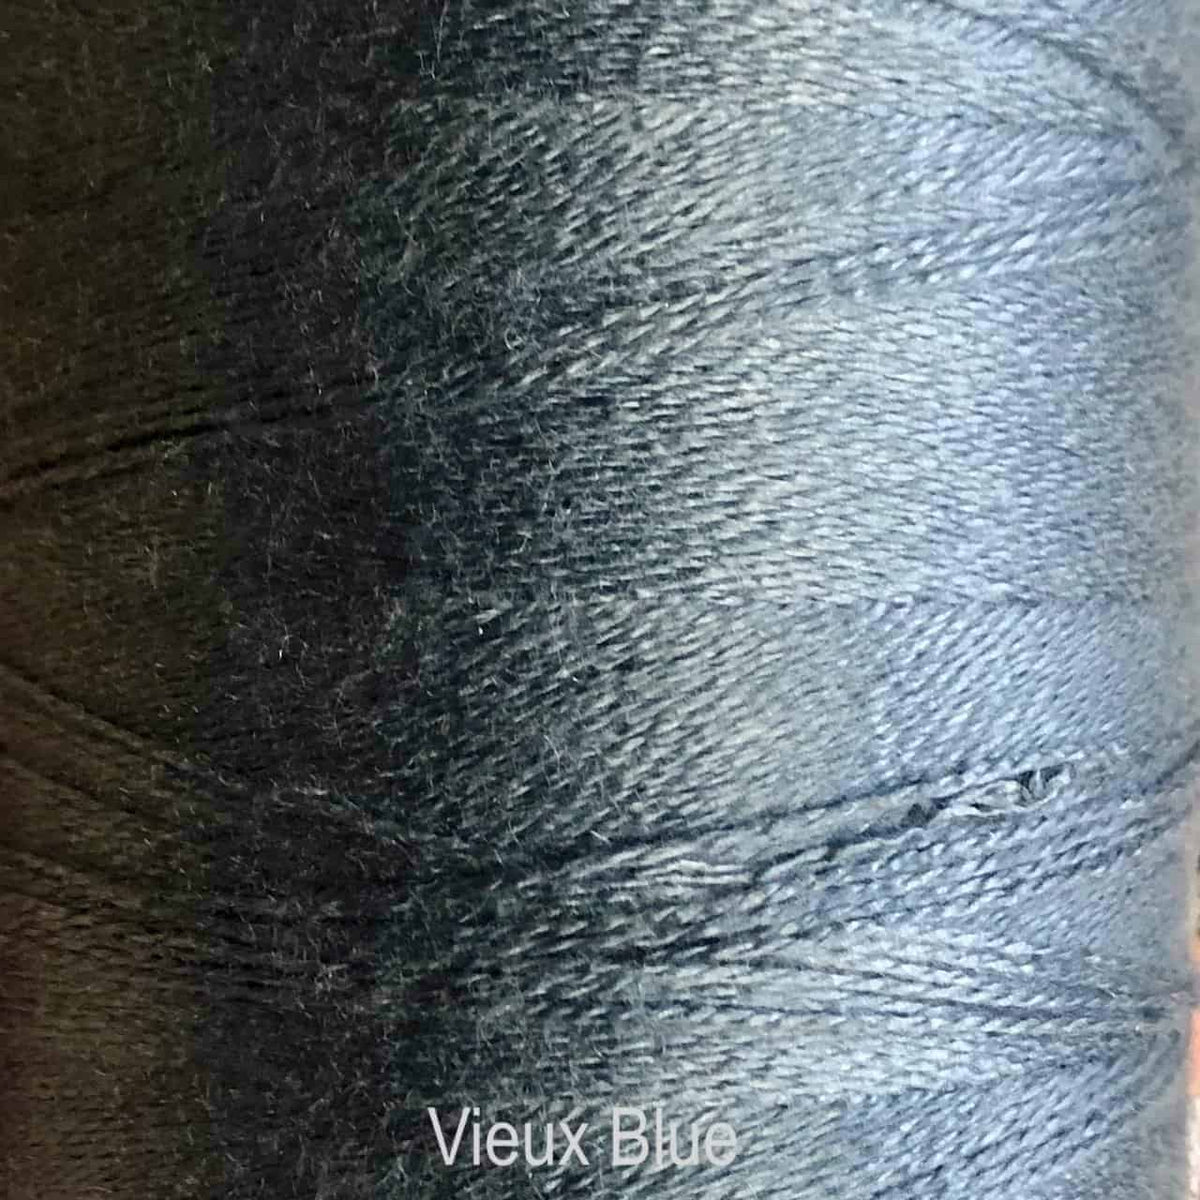 Maurice Brassard Tencel Vieux Blue Weaving Yarn